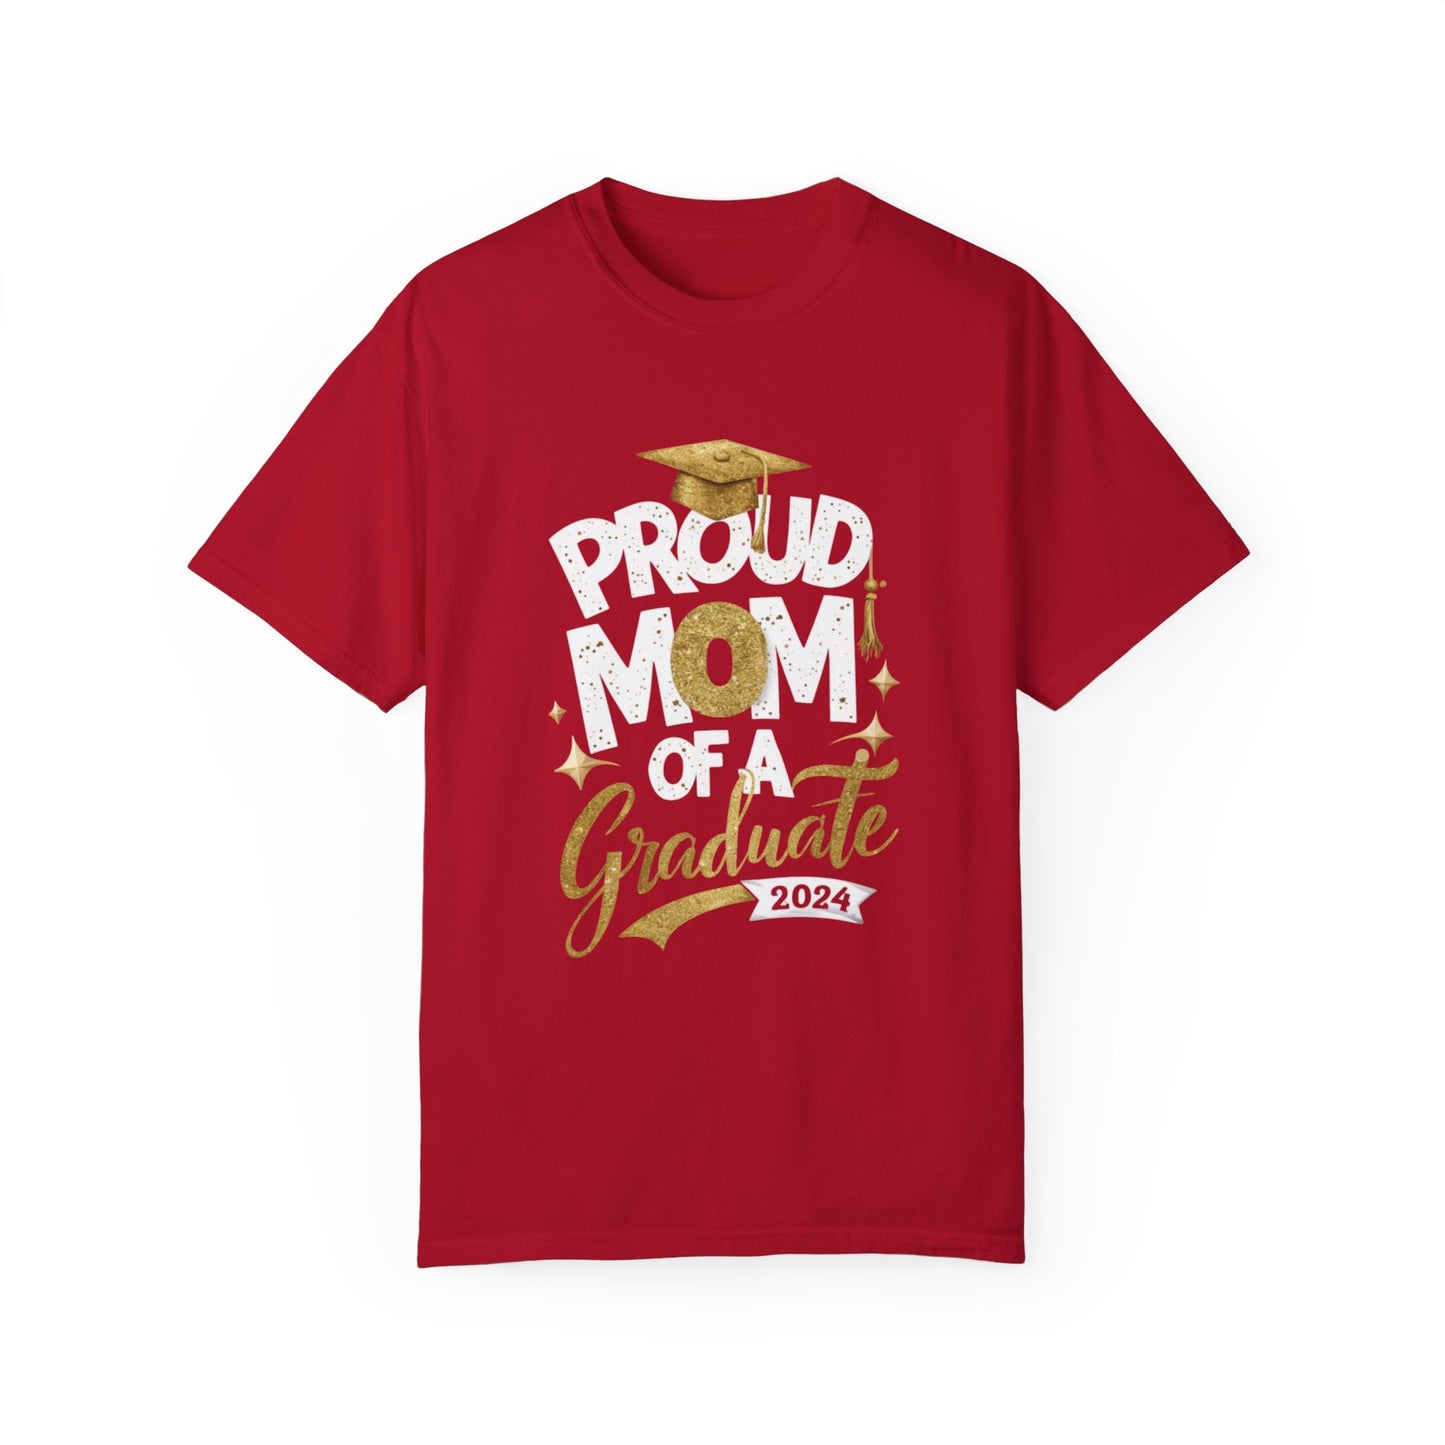 Proud Mom of a 2024 Graduate Unisex Garment-dyed T-shirt Cotton Funny Humorous Graphic Soft Premium Unisex Men Women Red T-shirt Birthday Gift-2